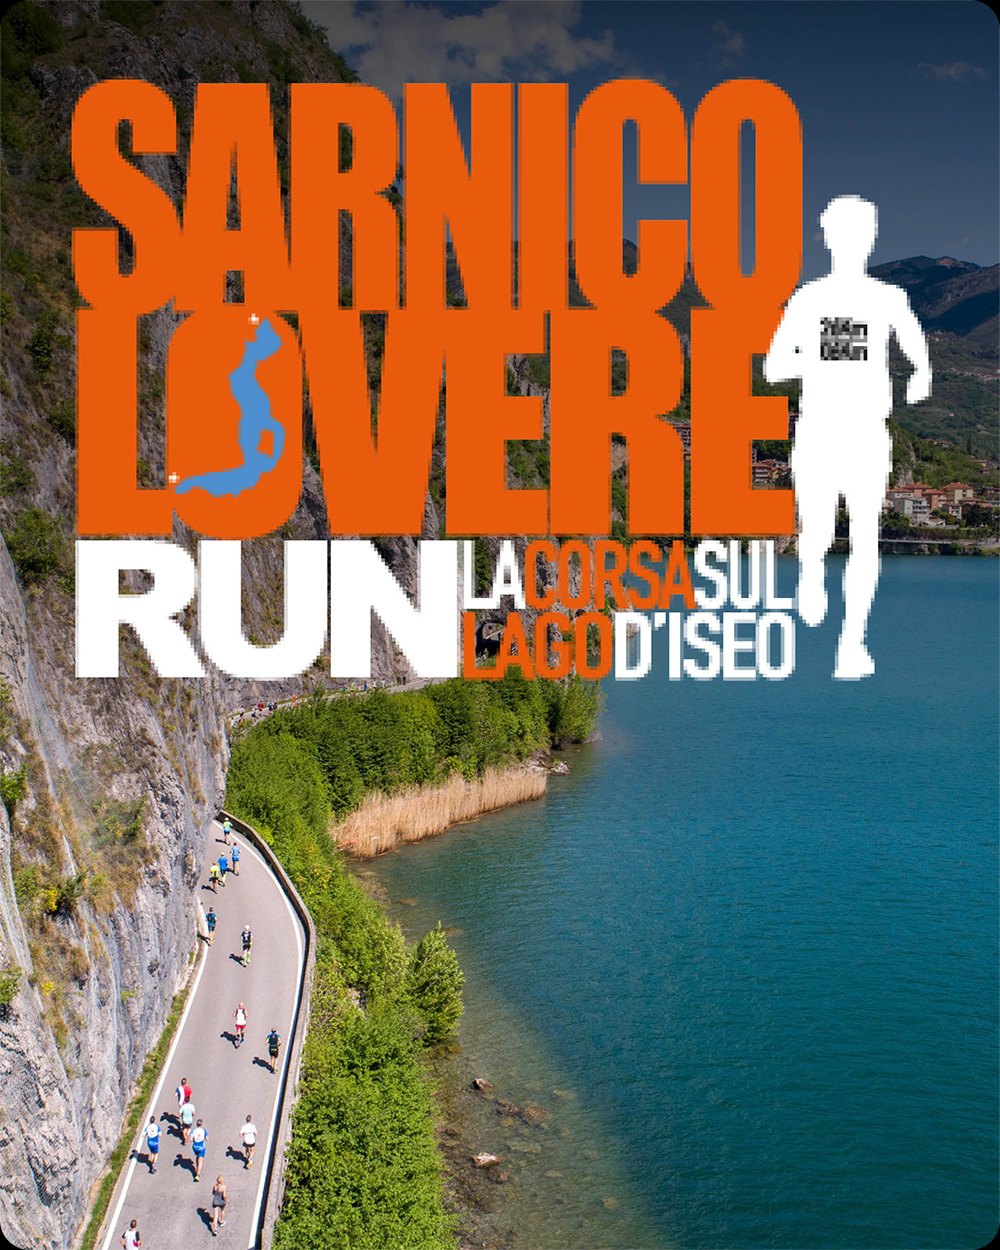 Sarnico Lovere Run